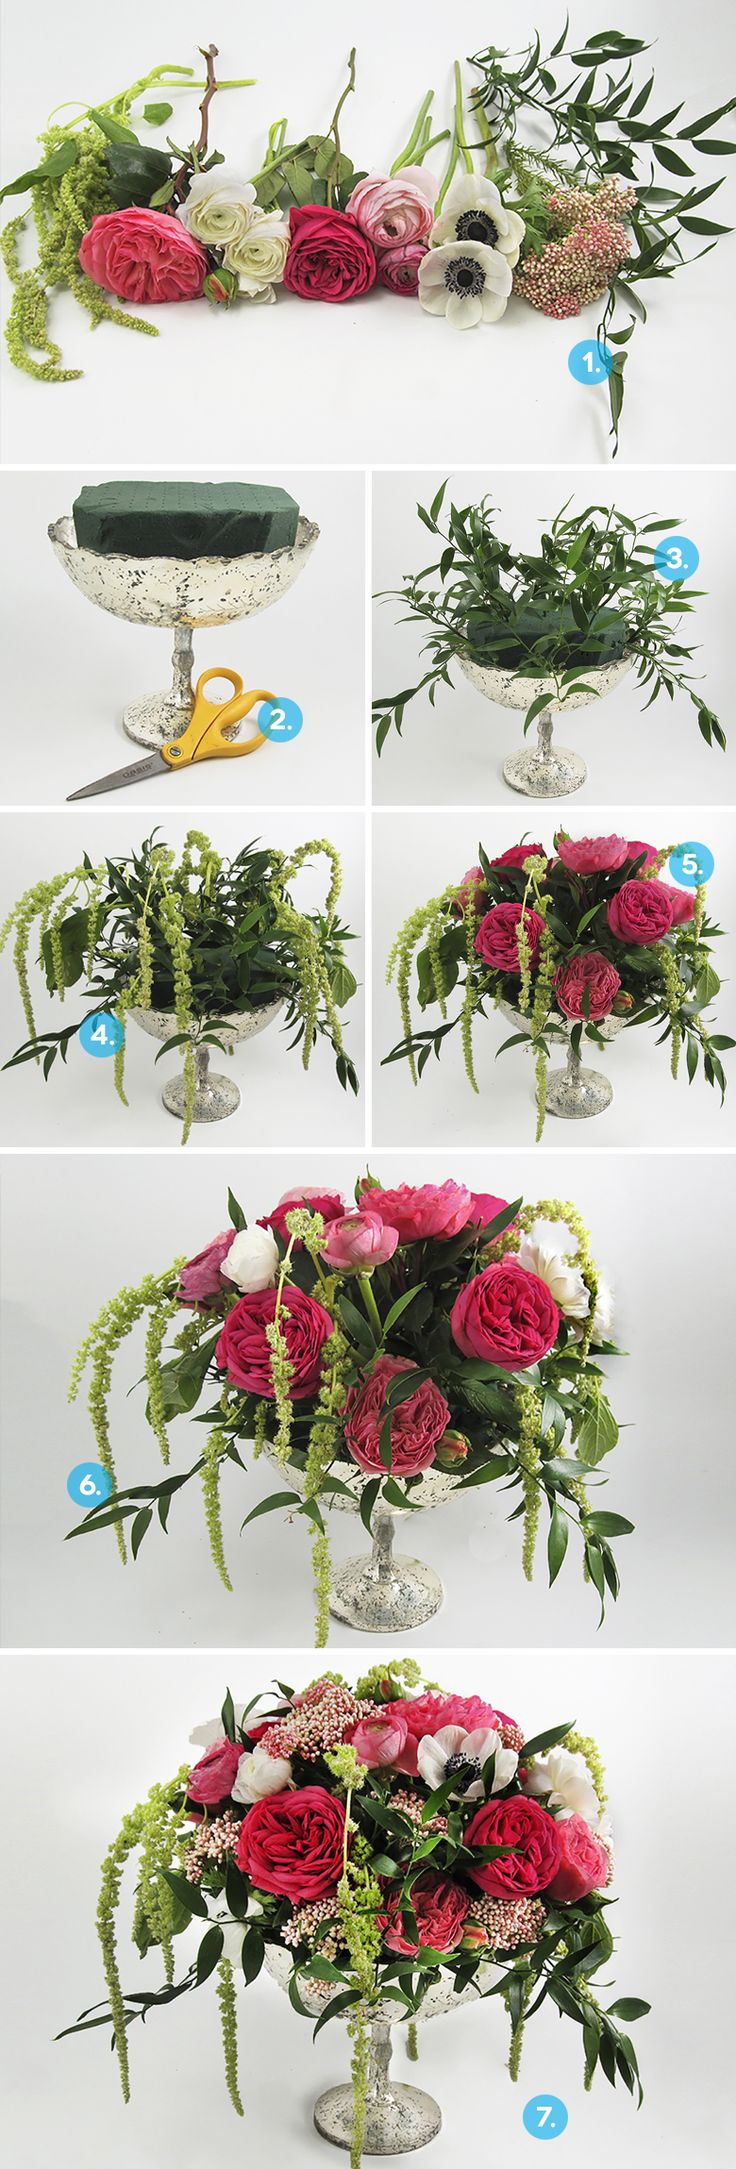 DIY Projects: Flower Arrangements - Pretty Designs